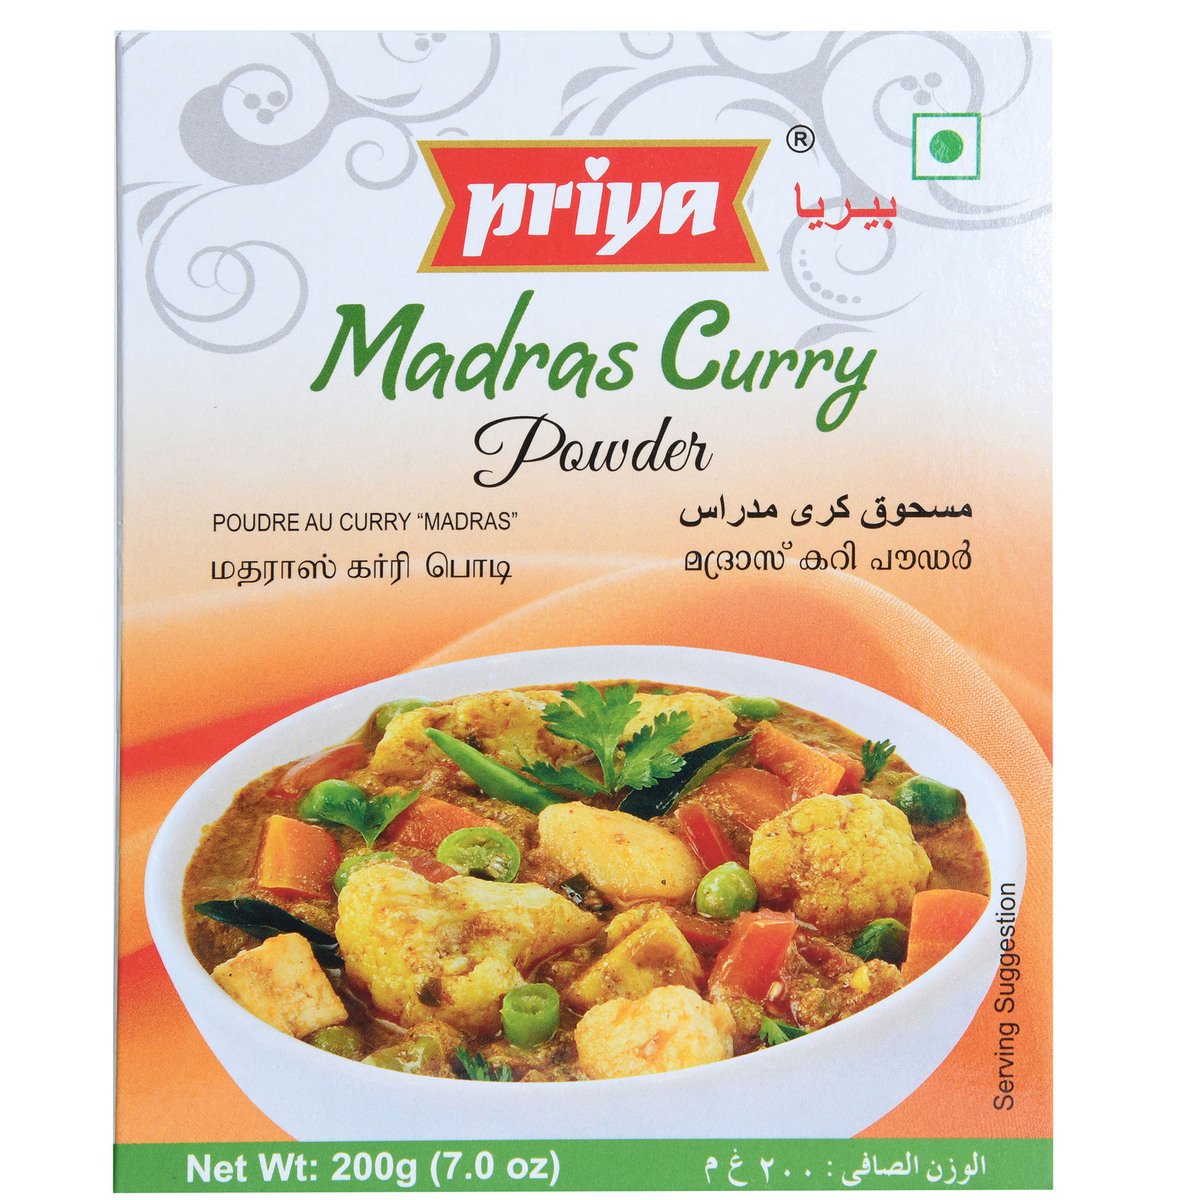 Priya Madras Curry Powder 200g